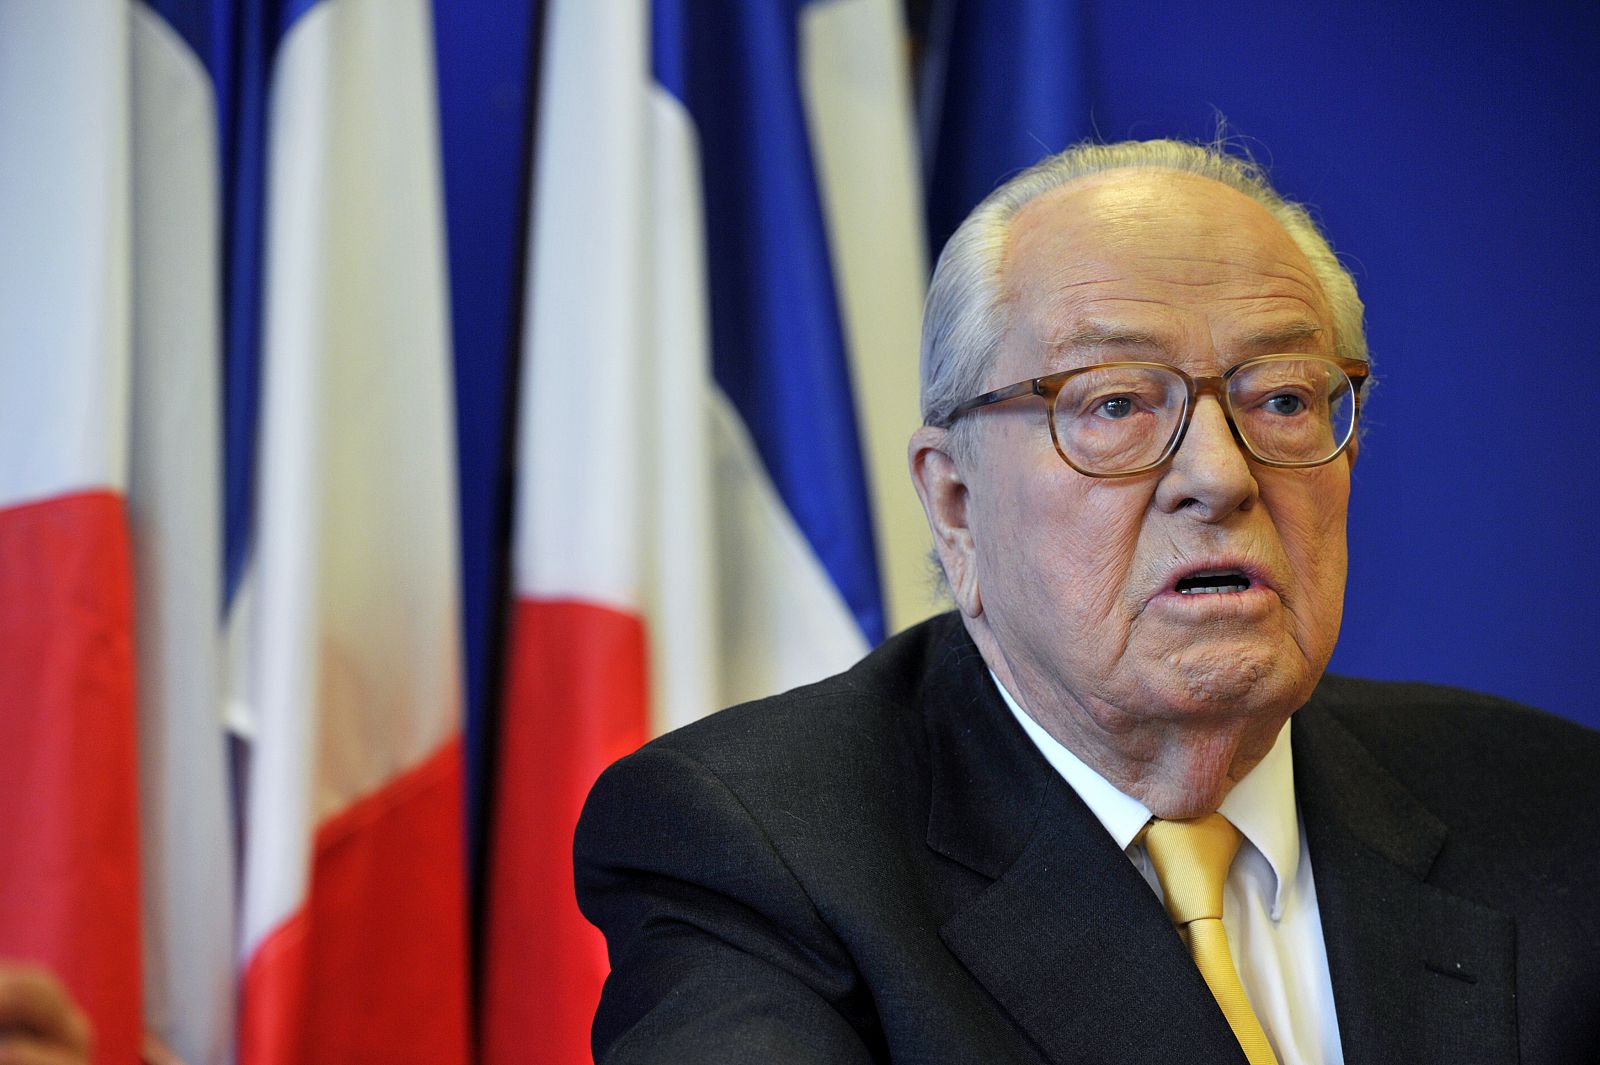 El líder de la ultraderecha francesa, Jean-Marie Le Pen, ha vuelto a criticar a los inmigrantes.